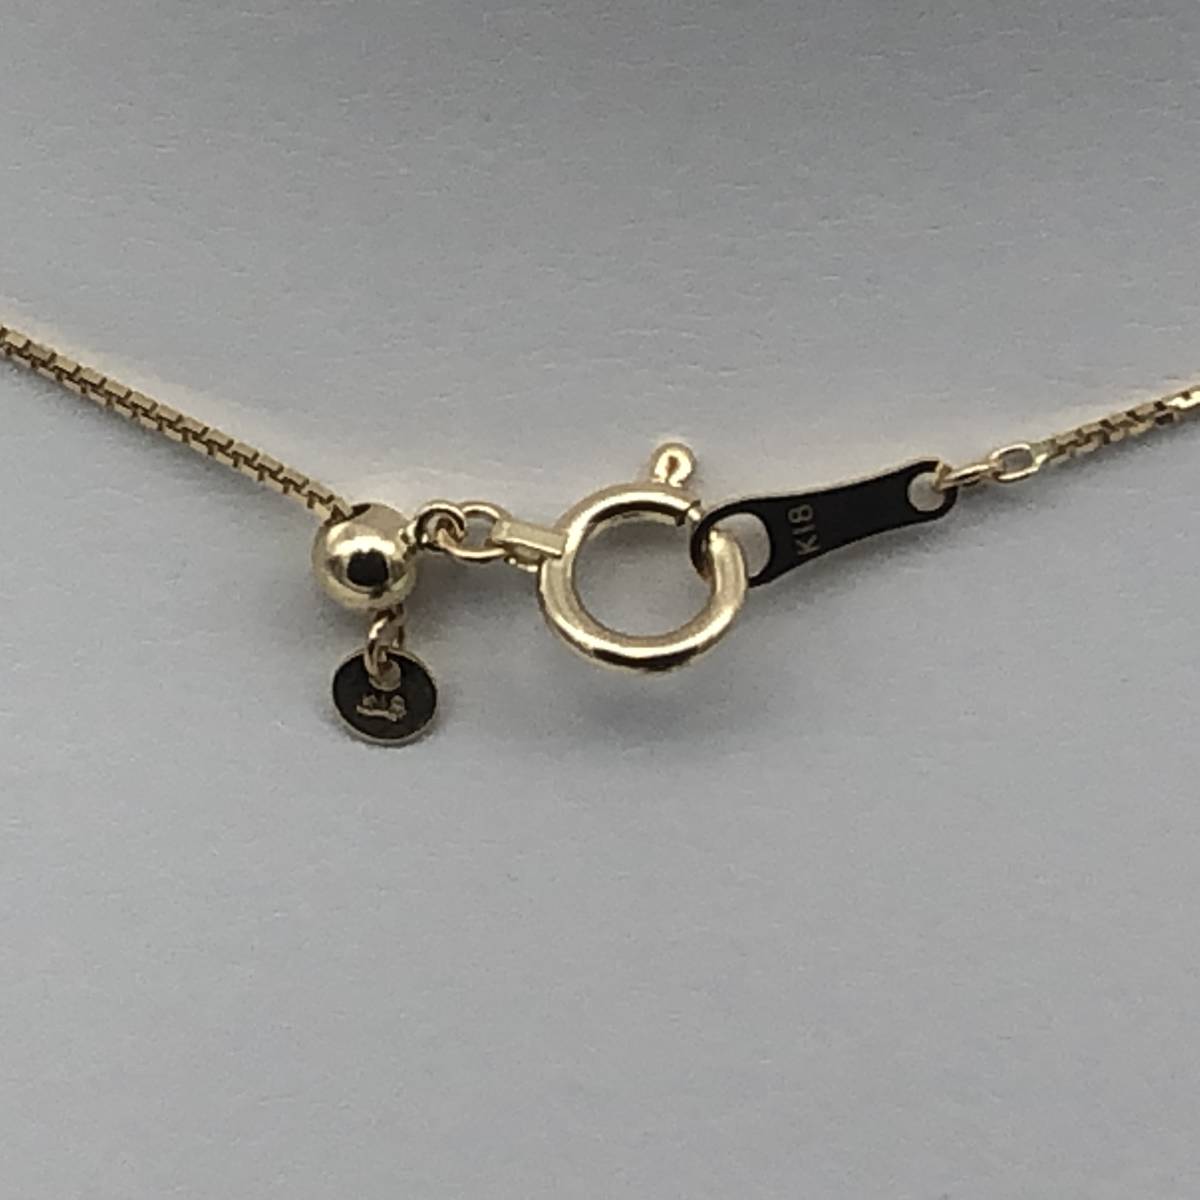 K18YG オニキス オパール(カメオ) ペンダント ネックレス オーバル gold onyx opal cameo pendant necklace